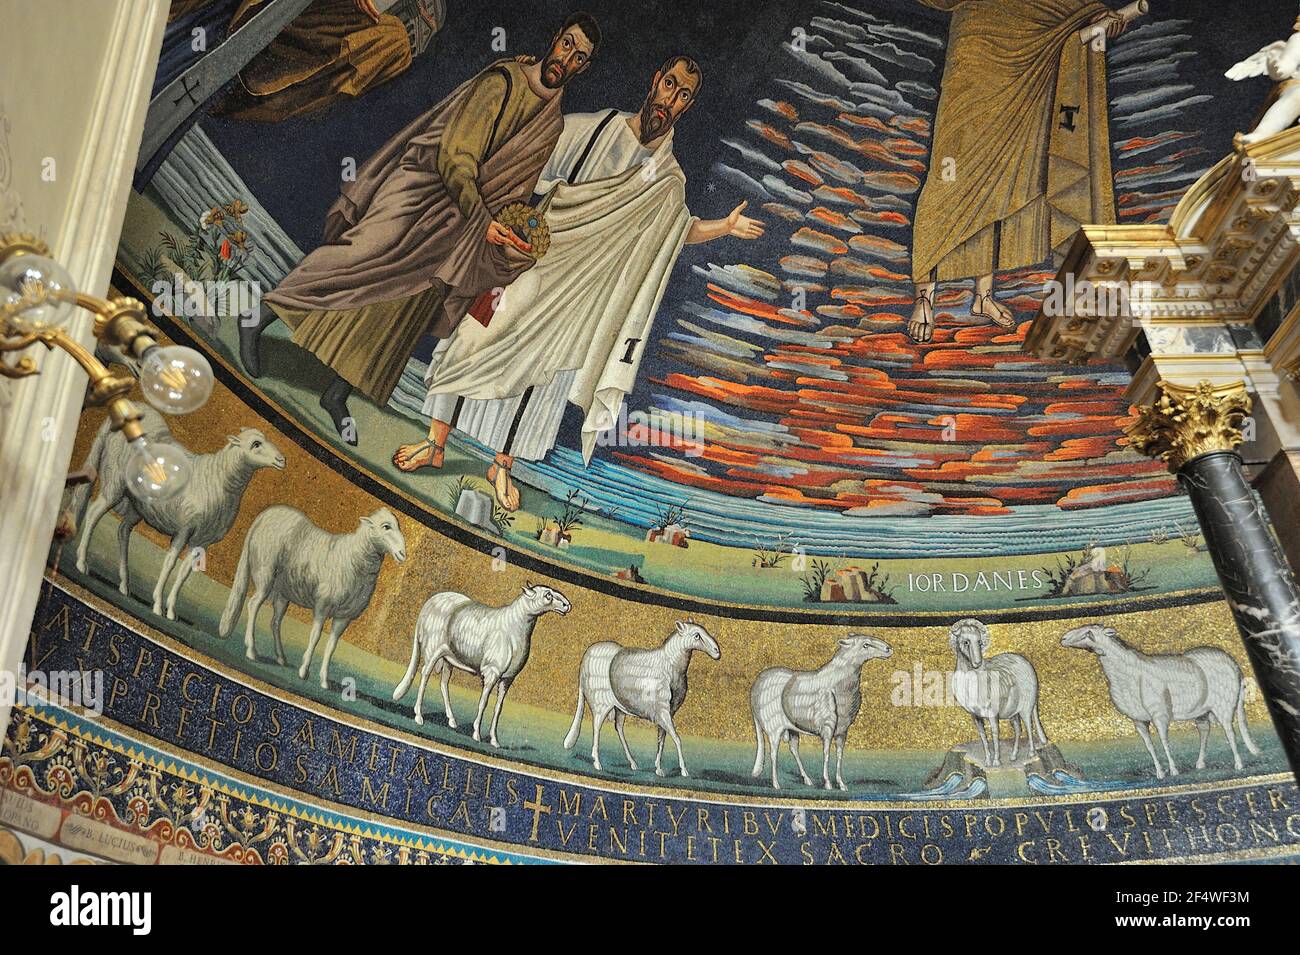 Italia, Roma, Basilica dei Santi Cosma e Damiano, mosaico abside Foto Stock